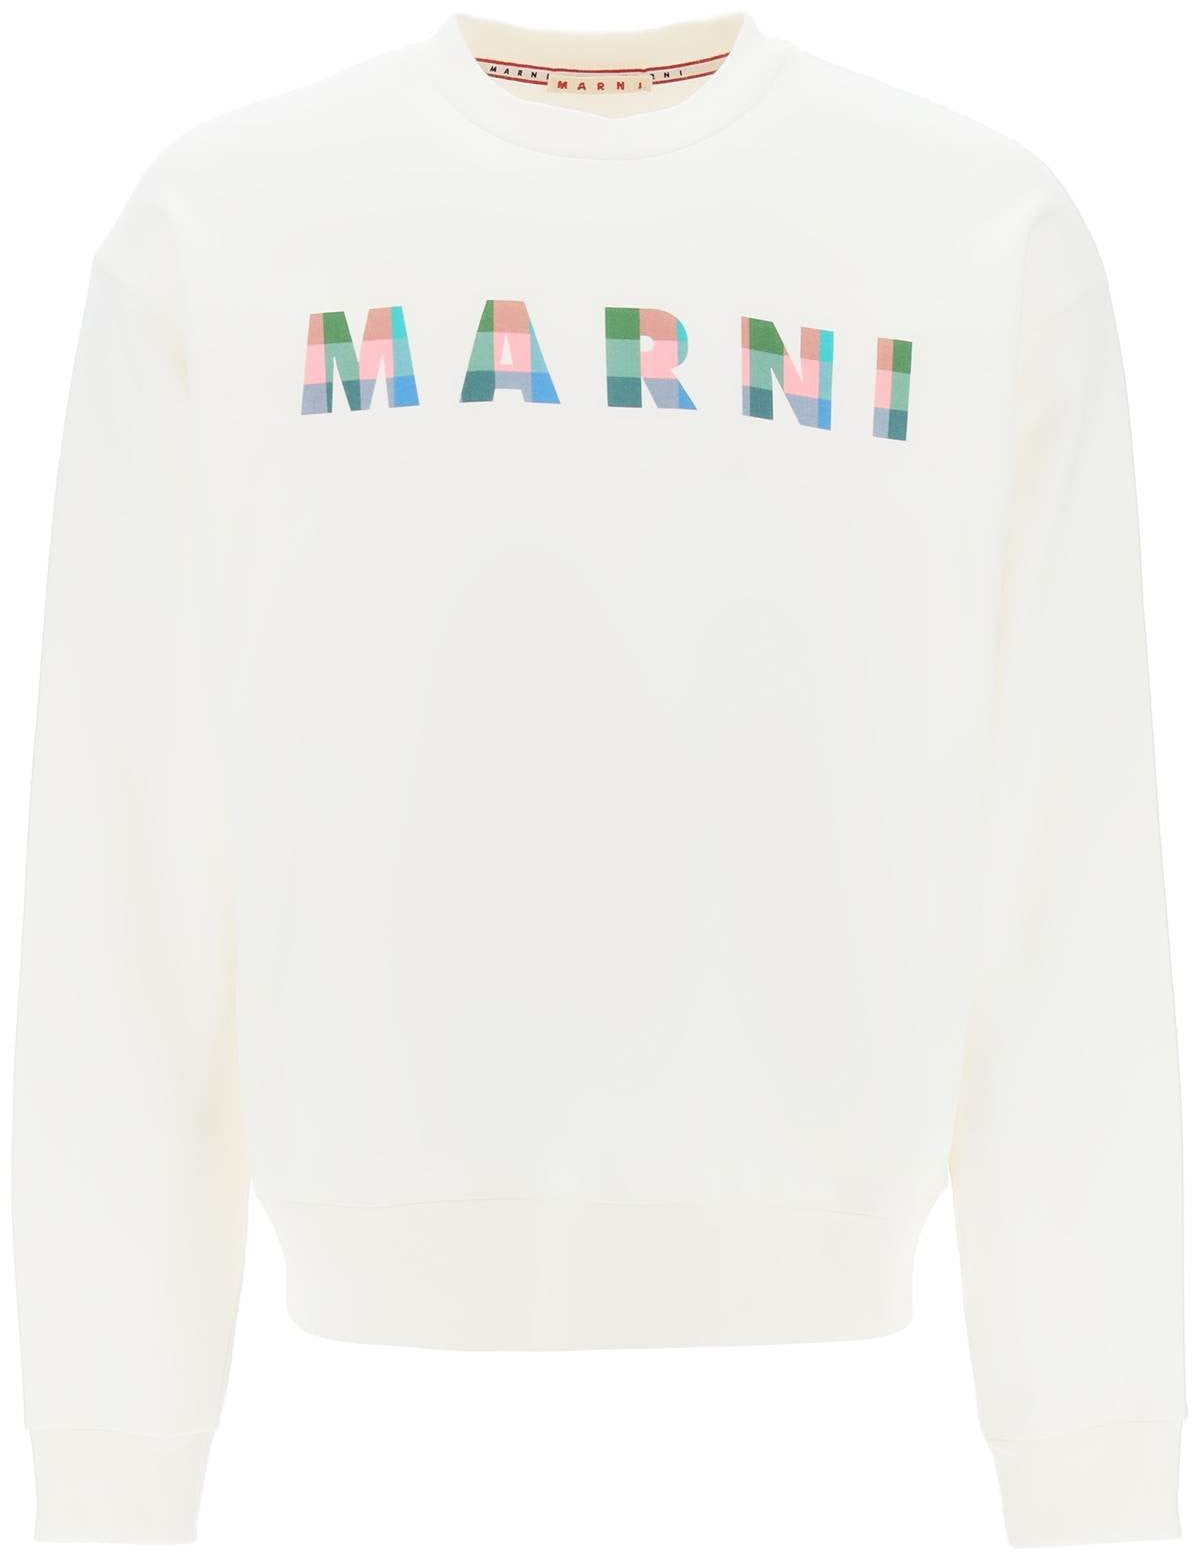 marni-sweatshirt-with-plaid-logo.jpg